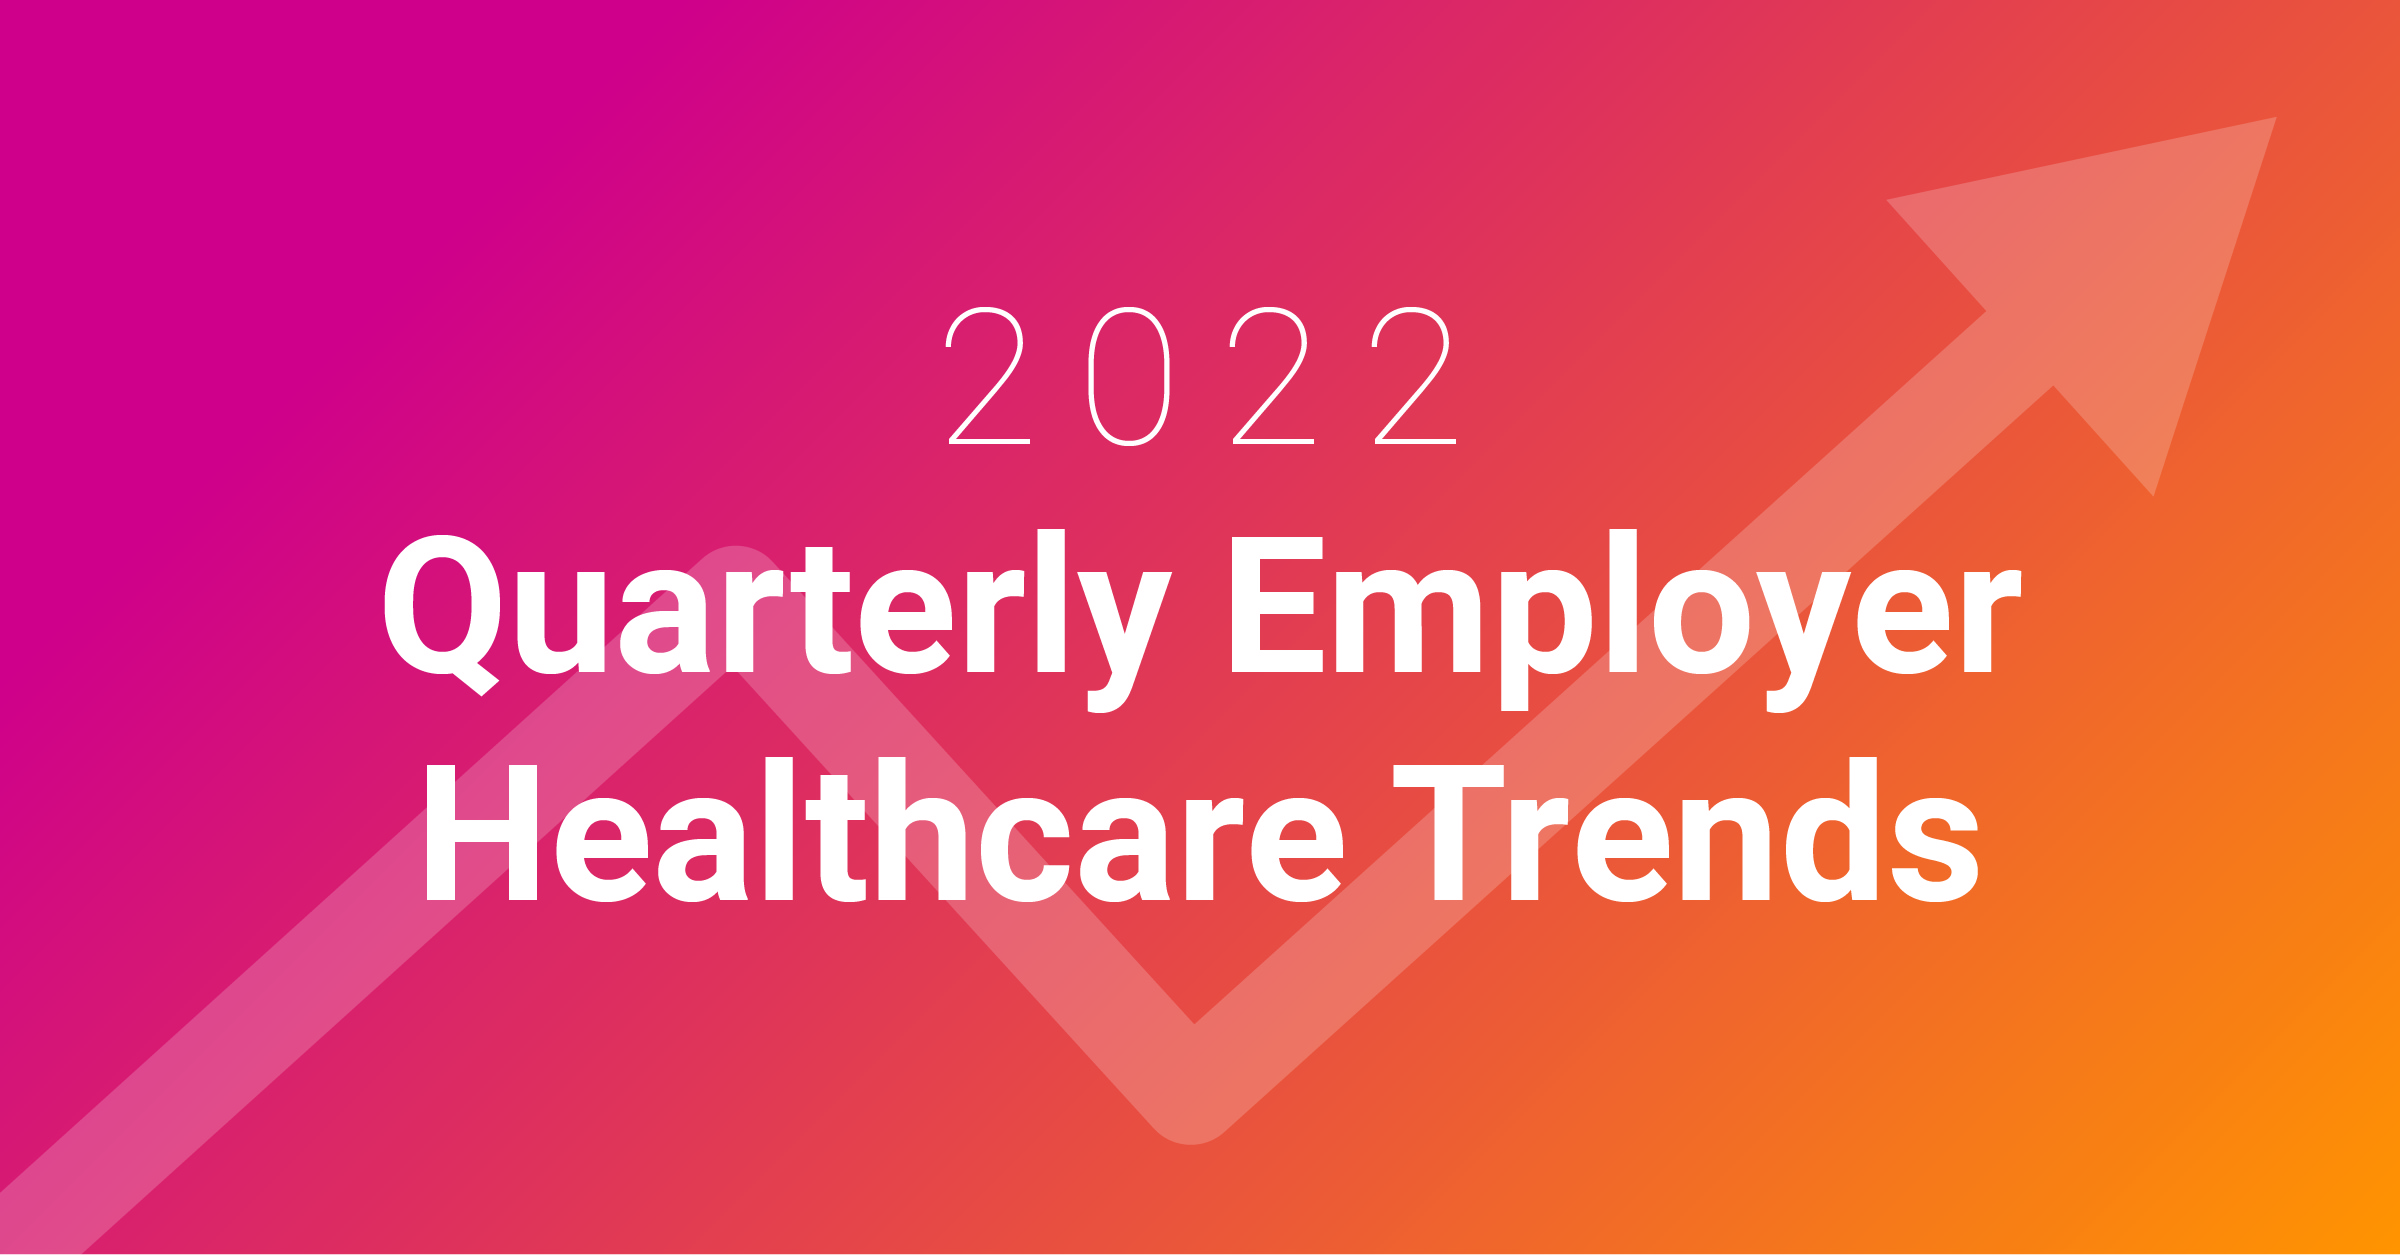 healthcare trends